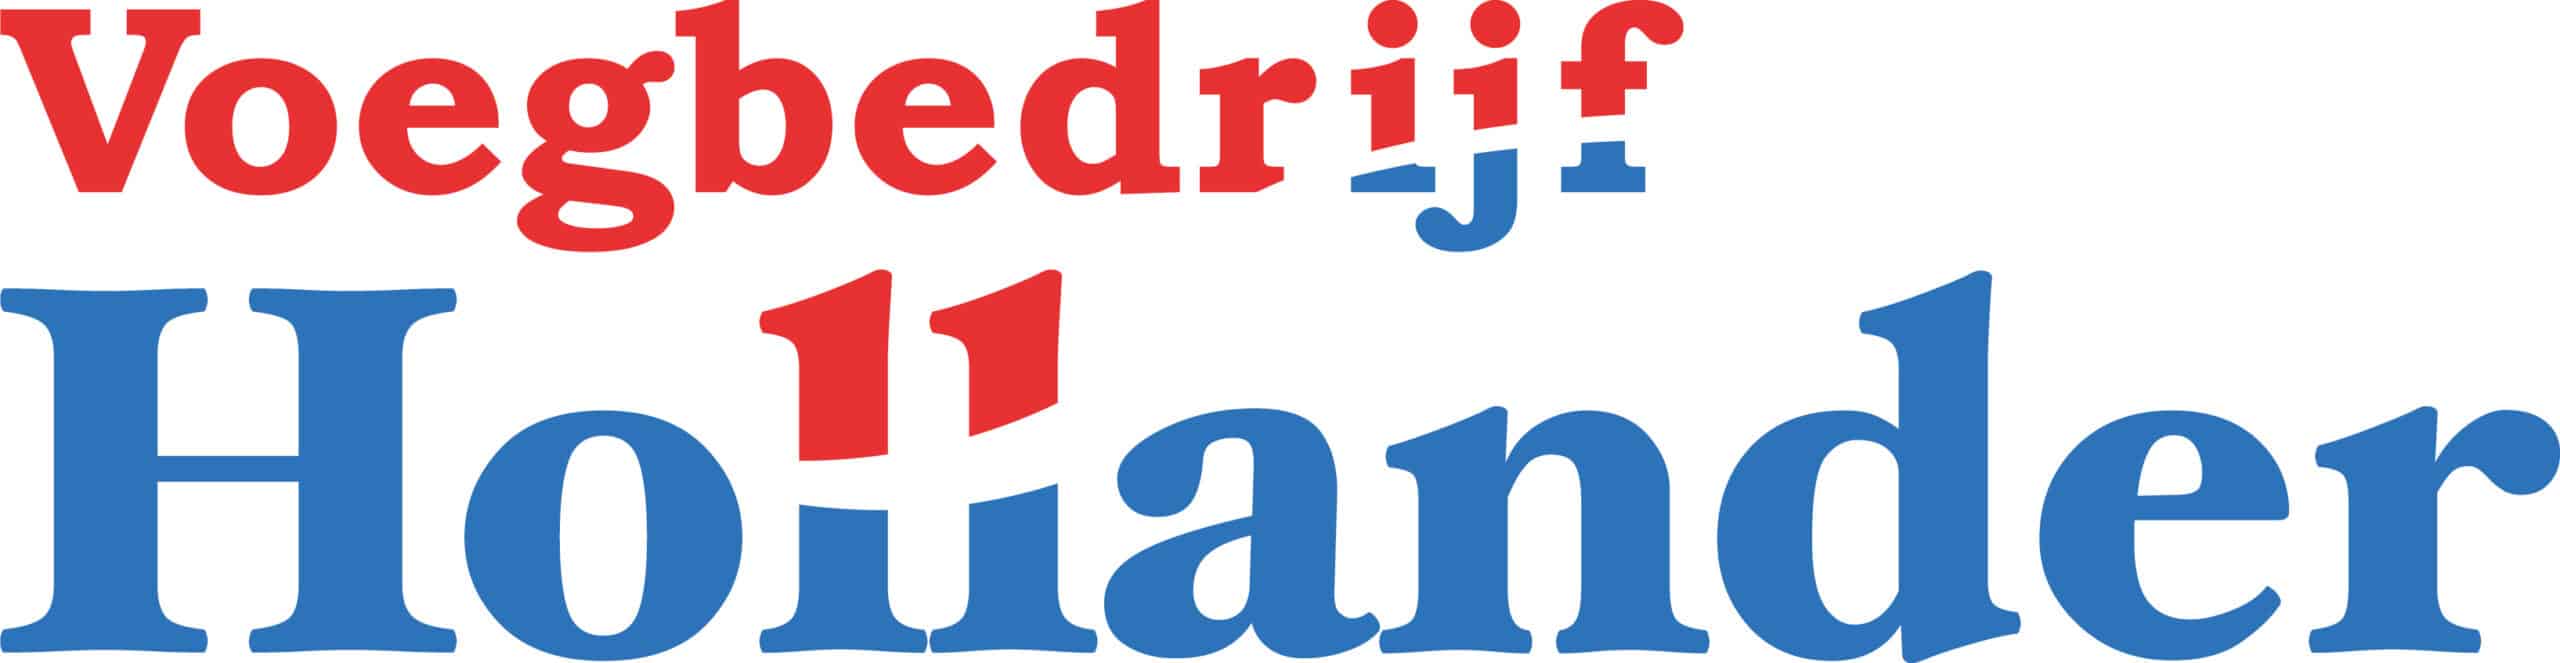 Logo_voegbedrijf_hollander_2018_def